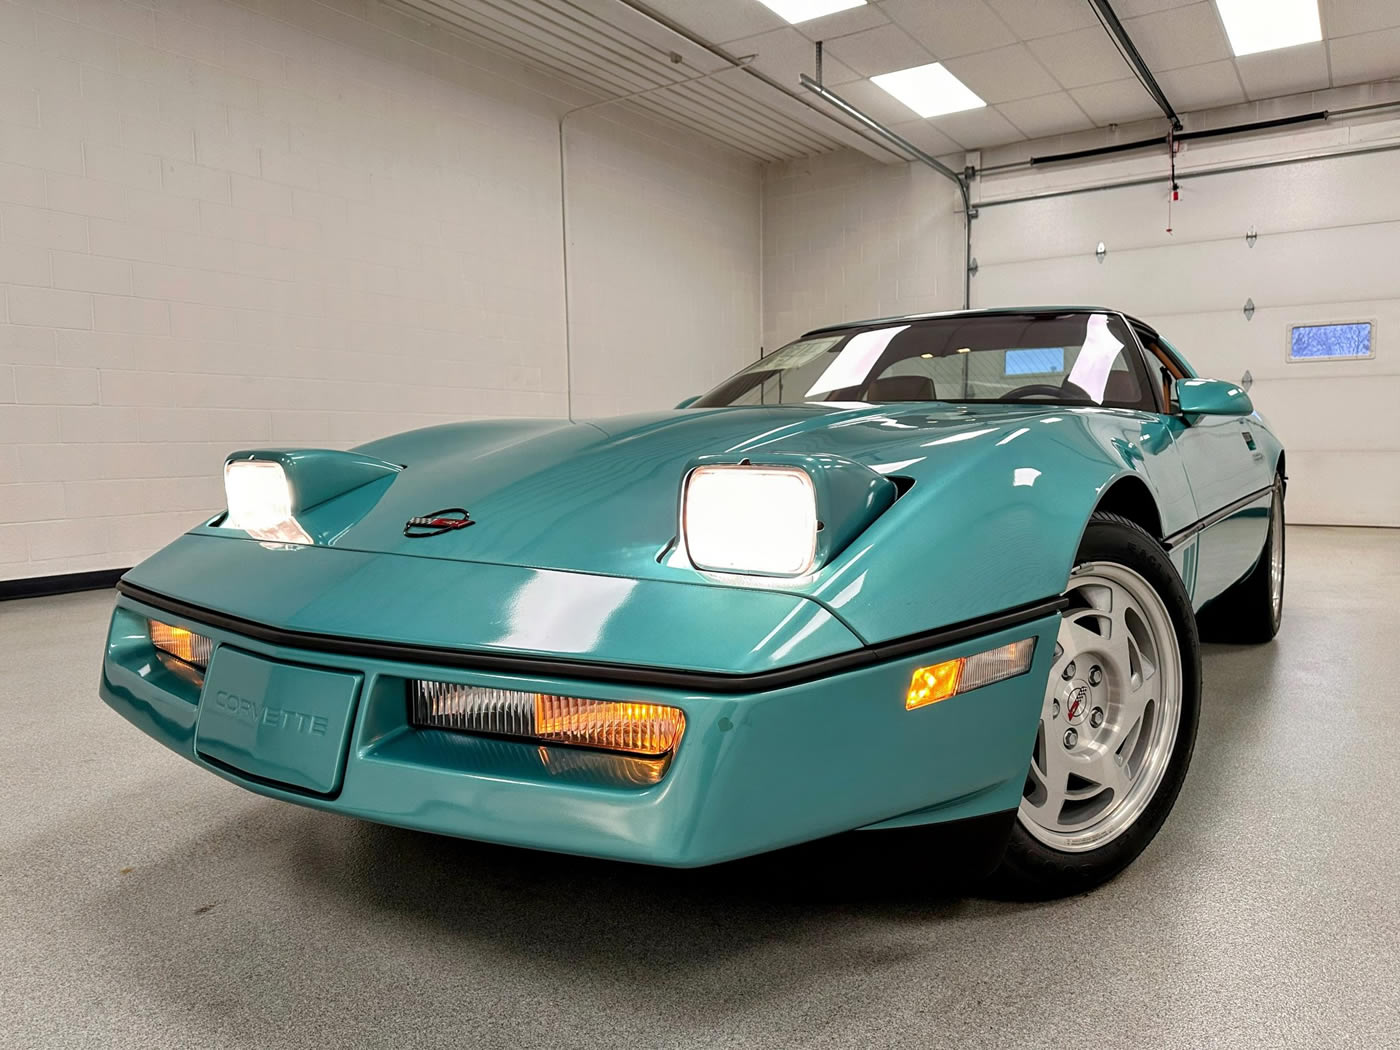 1990 Corvette ZR-1 in Turquoise Metallic